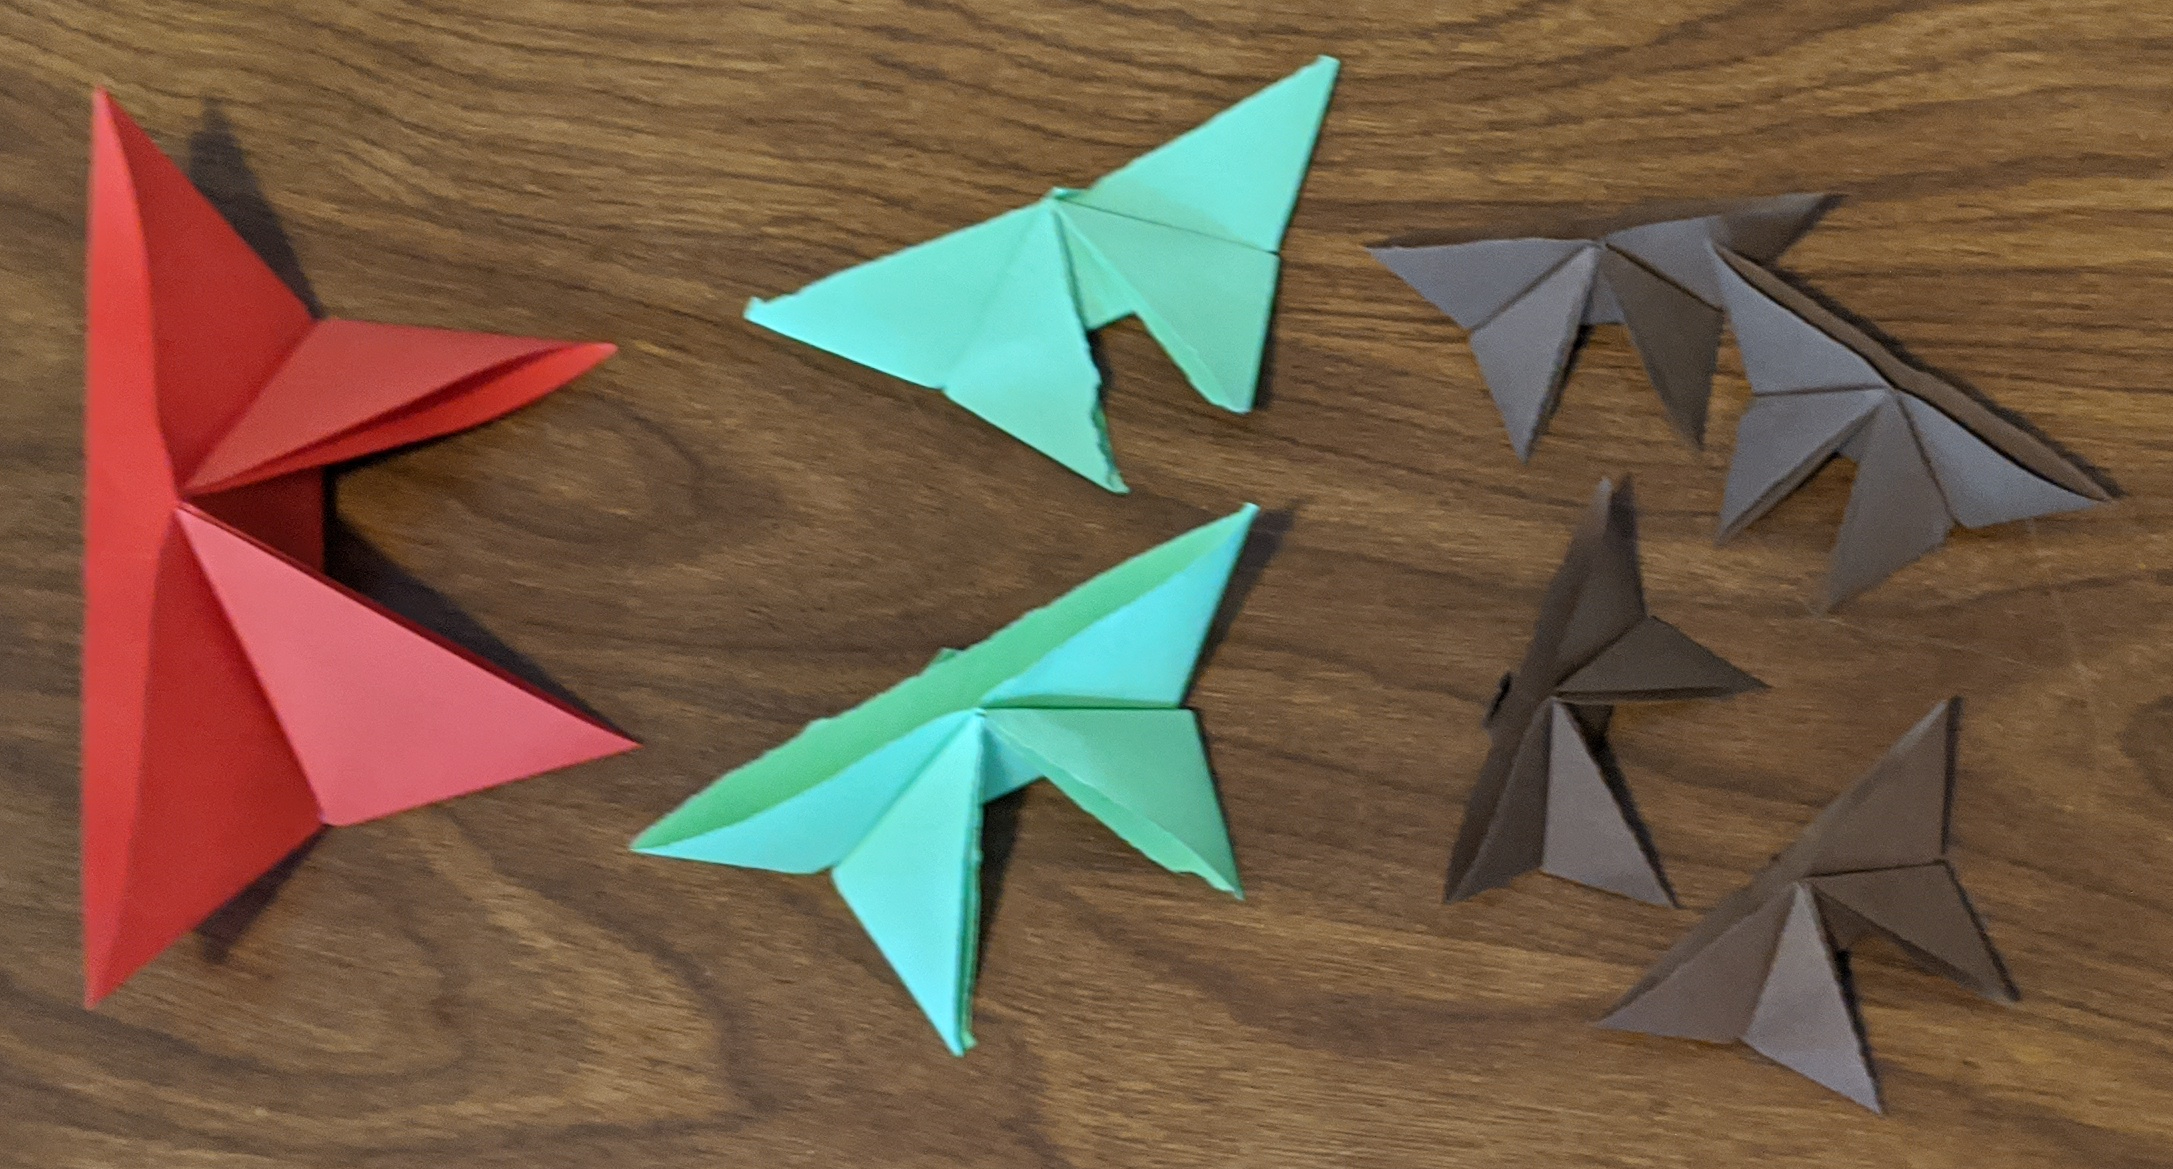 9. Origami Butterflies